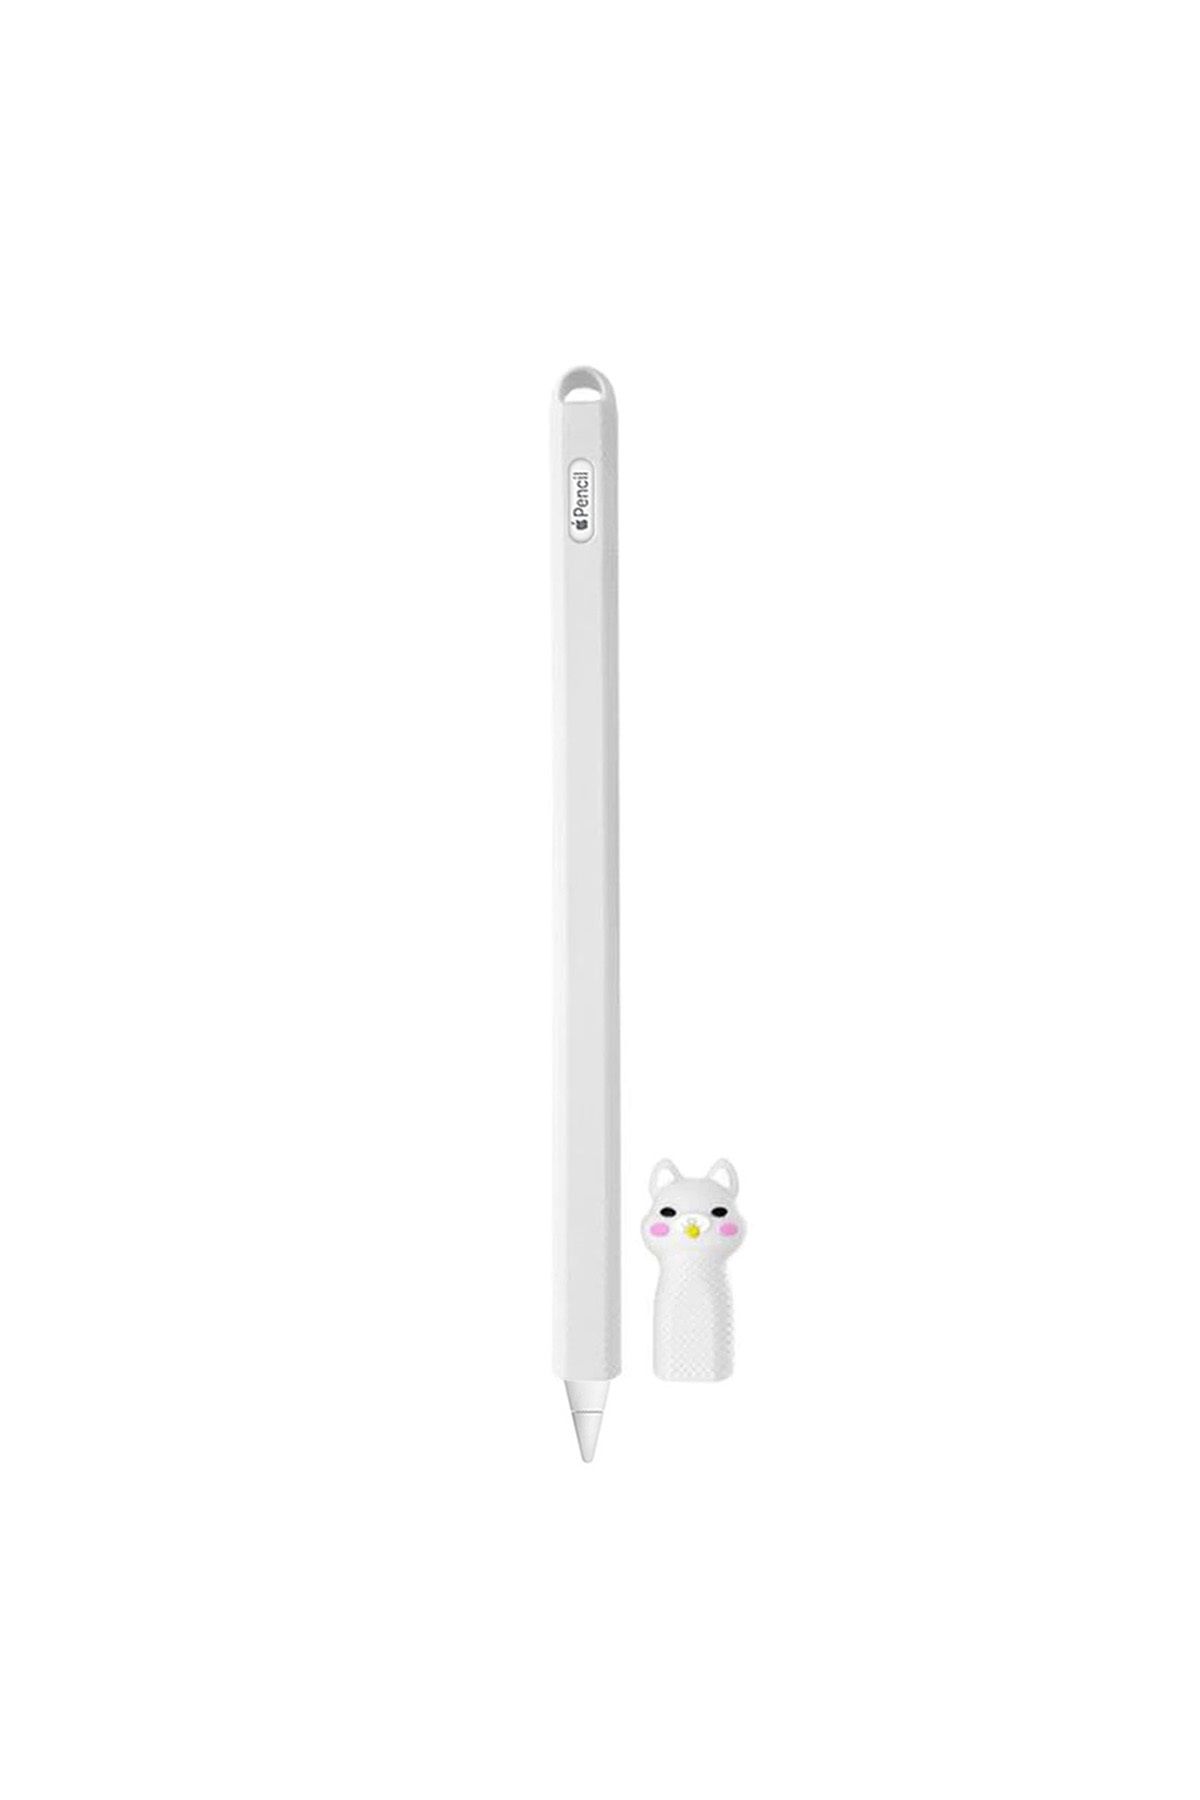 Tagomoon Apple Pencil (2. nesil) Uyumlu Kılıf Renkli Kedi Figürlü Kaydırmaz Silikon Koruyucu